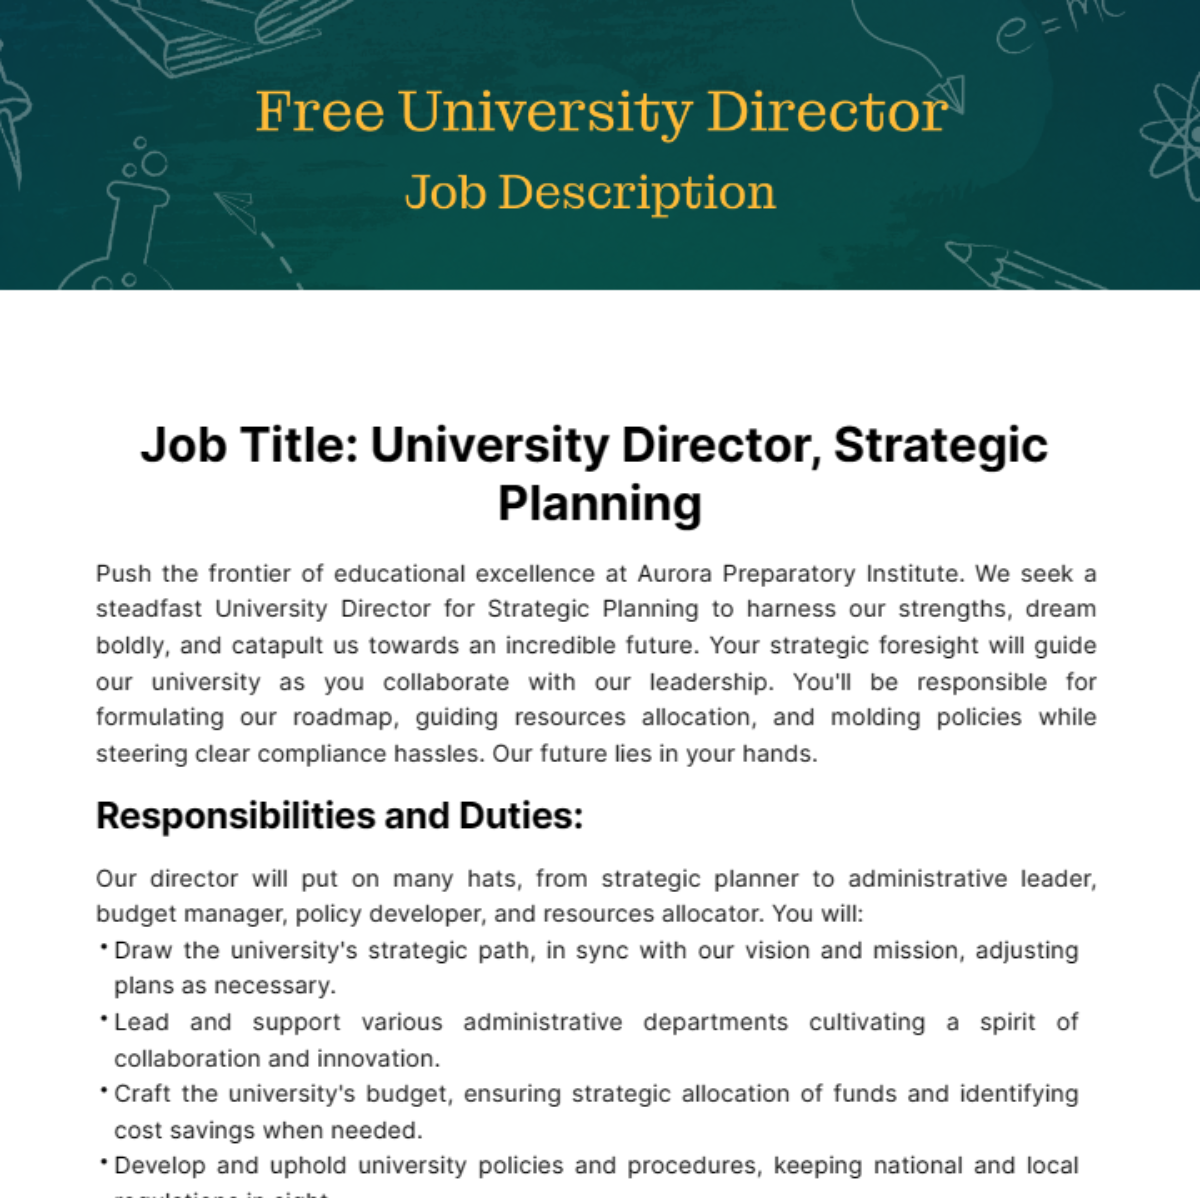 Free University Director Job Description Template